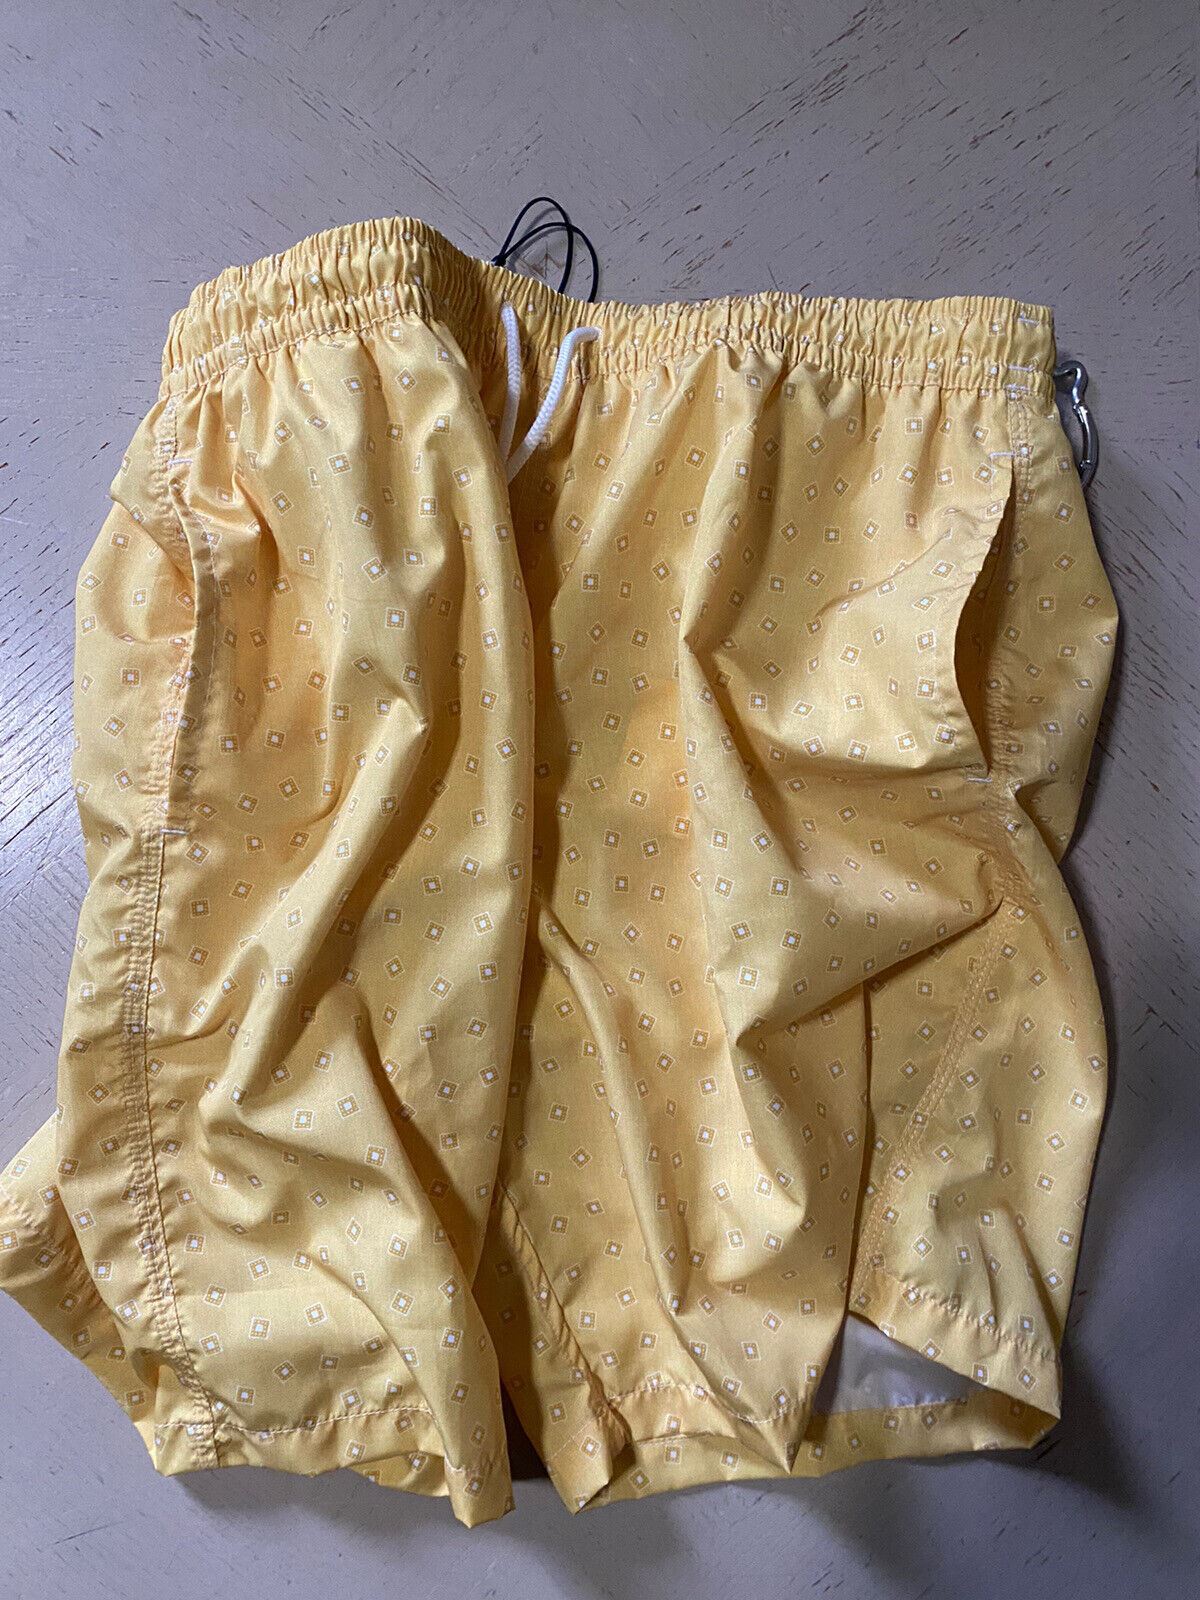 Мужские шорты для плавания NWT Fedeli, желтые, размер XL, Италия